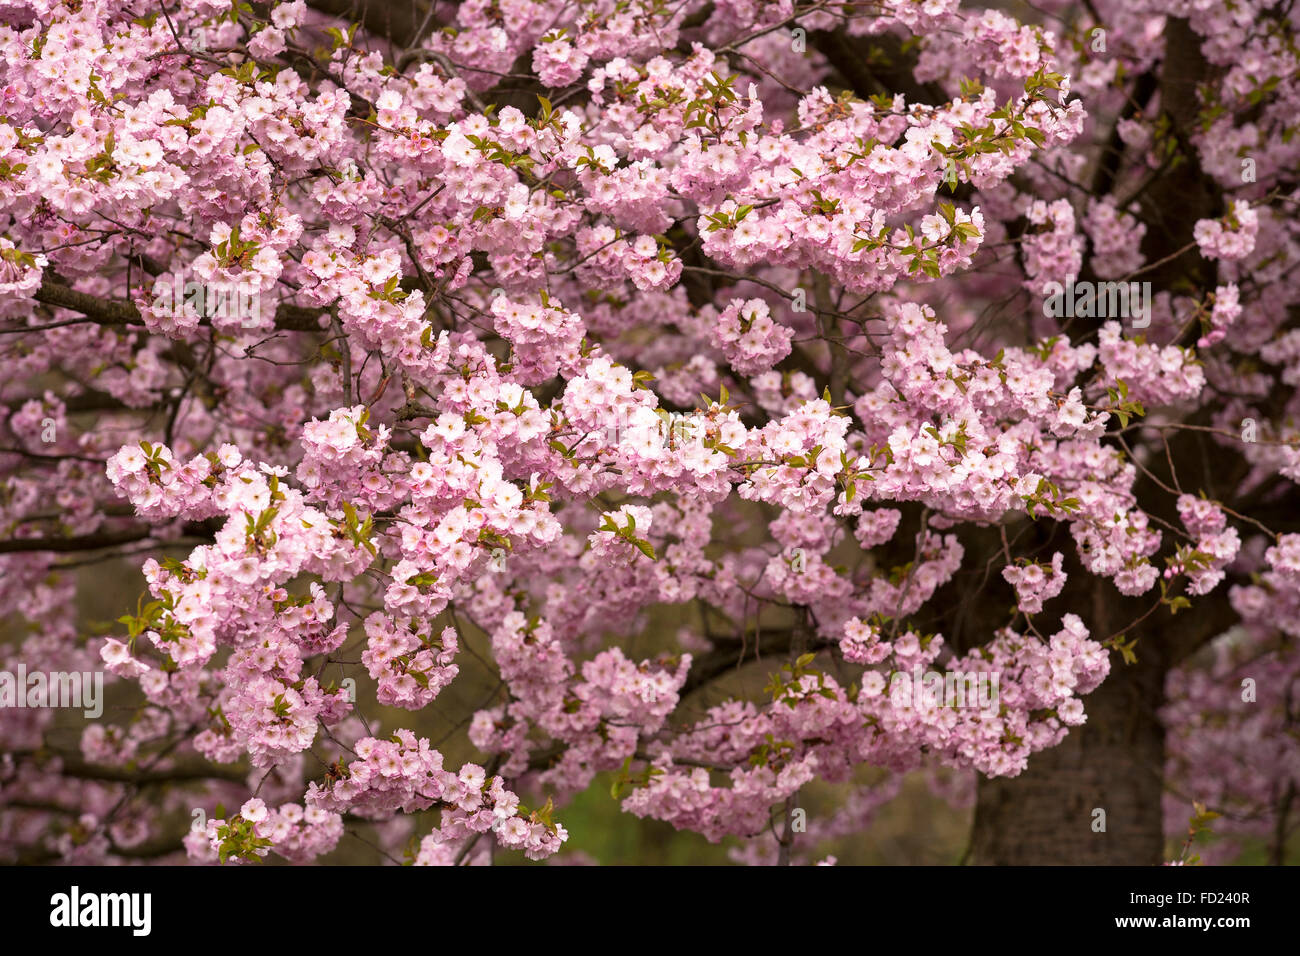 Europe, Germany, North Rhine-Westphalia, abloom Japanese cherry trees (lat. Prunus serrulata) near Sprockhoevel. Stock Photo